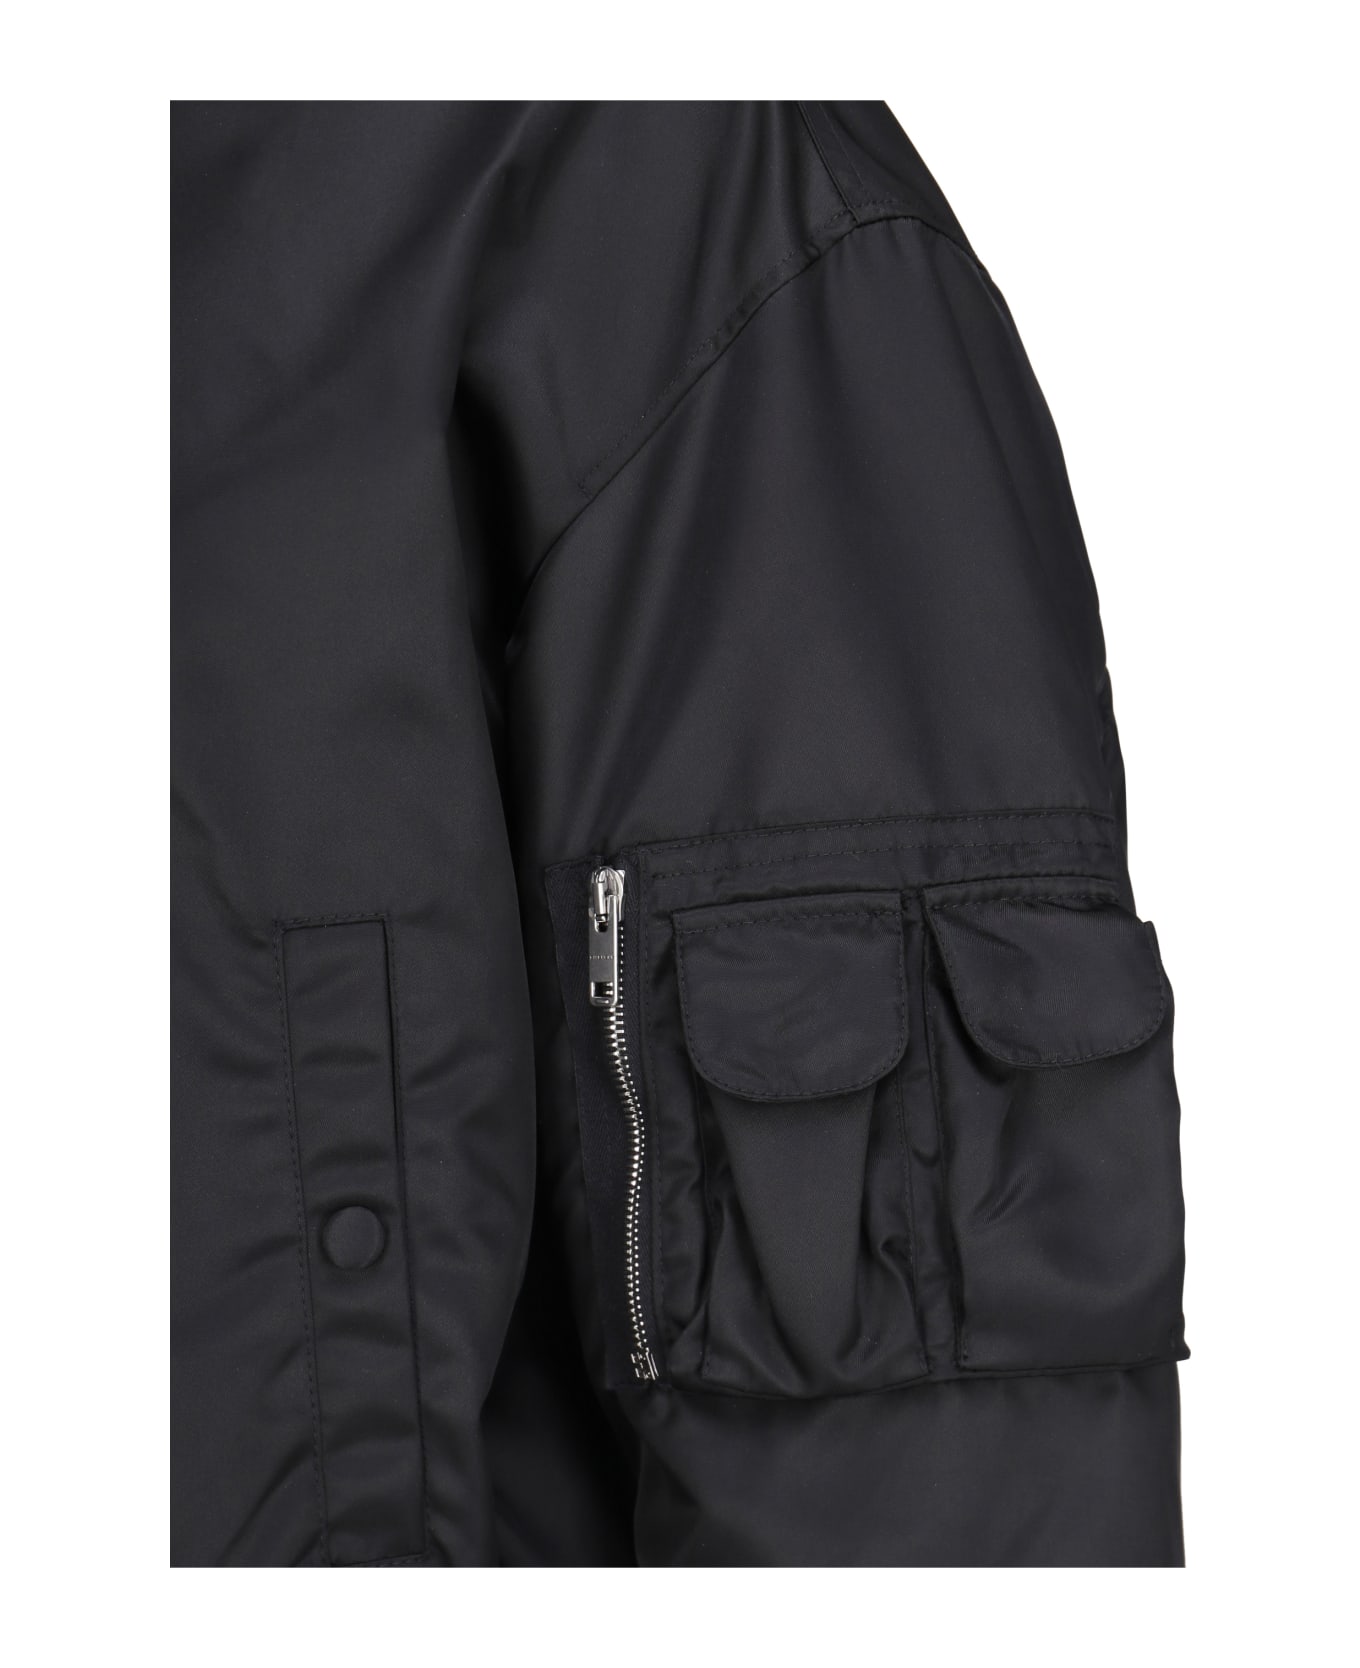 Givenchy Black Givenchy Bomber Jacket With Pocket Detail - Black